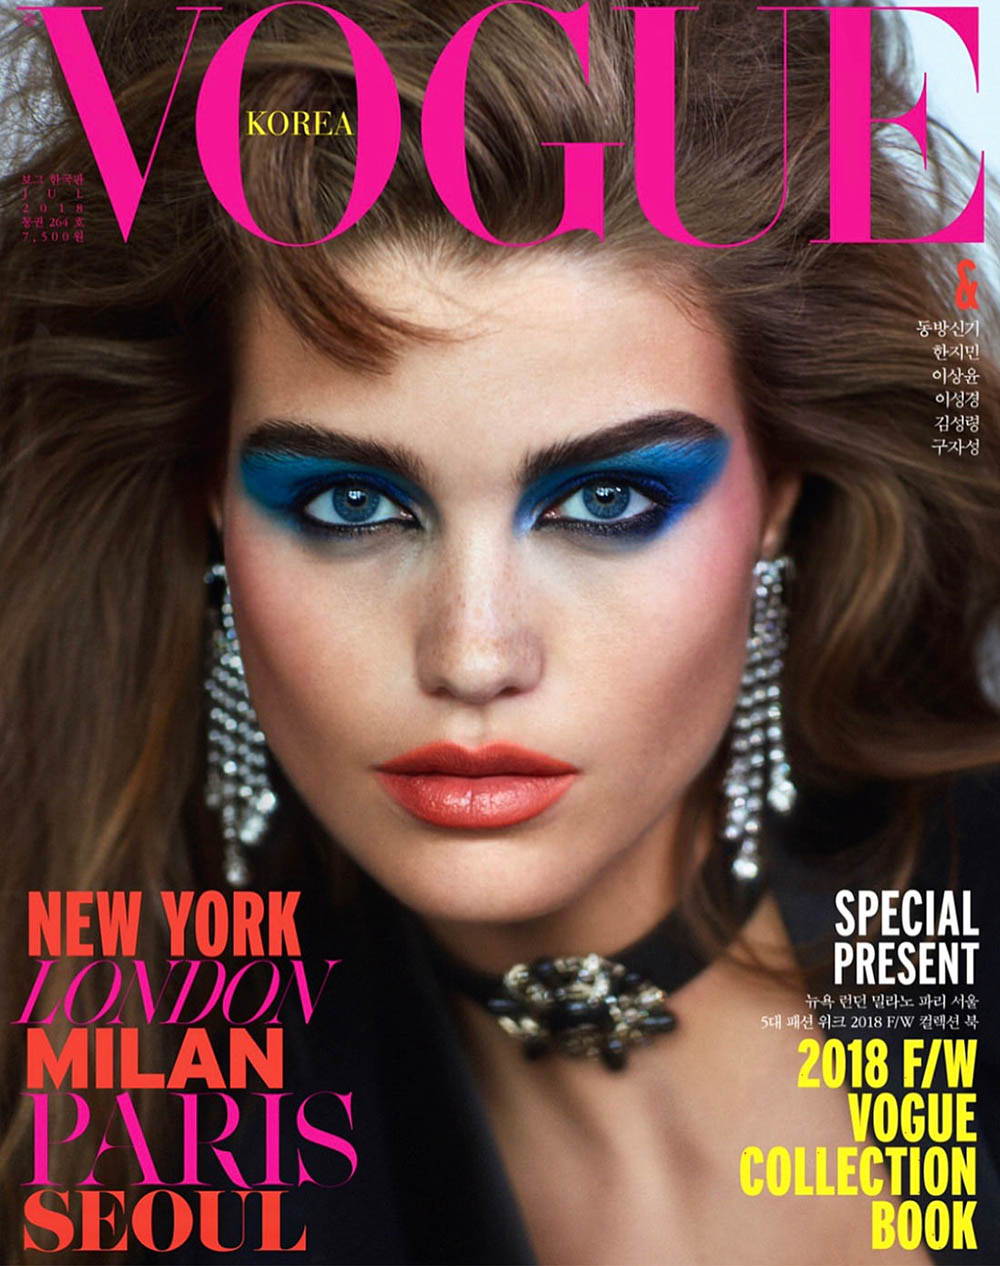 Vogue Korea using Lingerie Typeface with Gigi Hadid